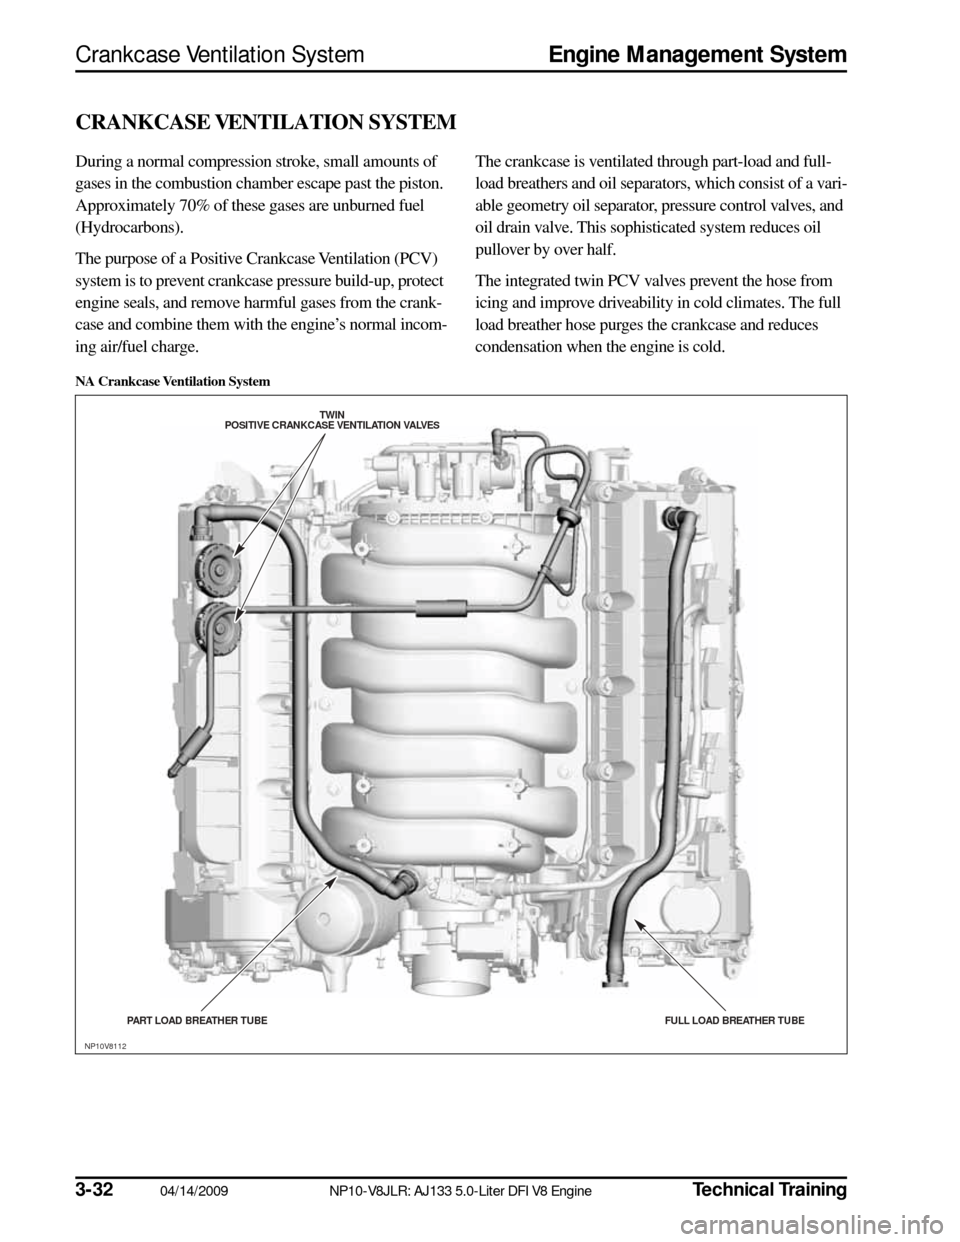 JAGUAR XF 2009 1.G AJ133 5.0L Engine Manual 3-3204/14/2009NP10-V8JLR: AJ133 5.0-Liter DFI V8 EngineTechnical Training
Crankcase Ventilation System Engine Management System
CRANKCASE VENTILATION SYSTEM
During a normal compression stroke, small a